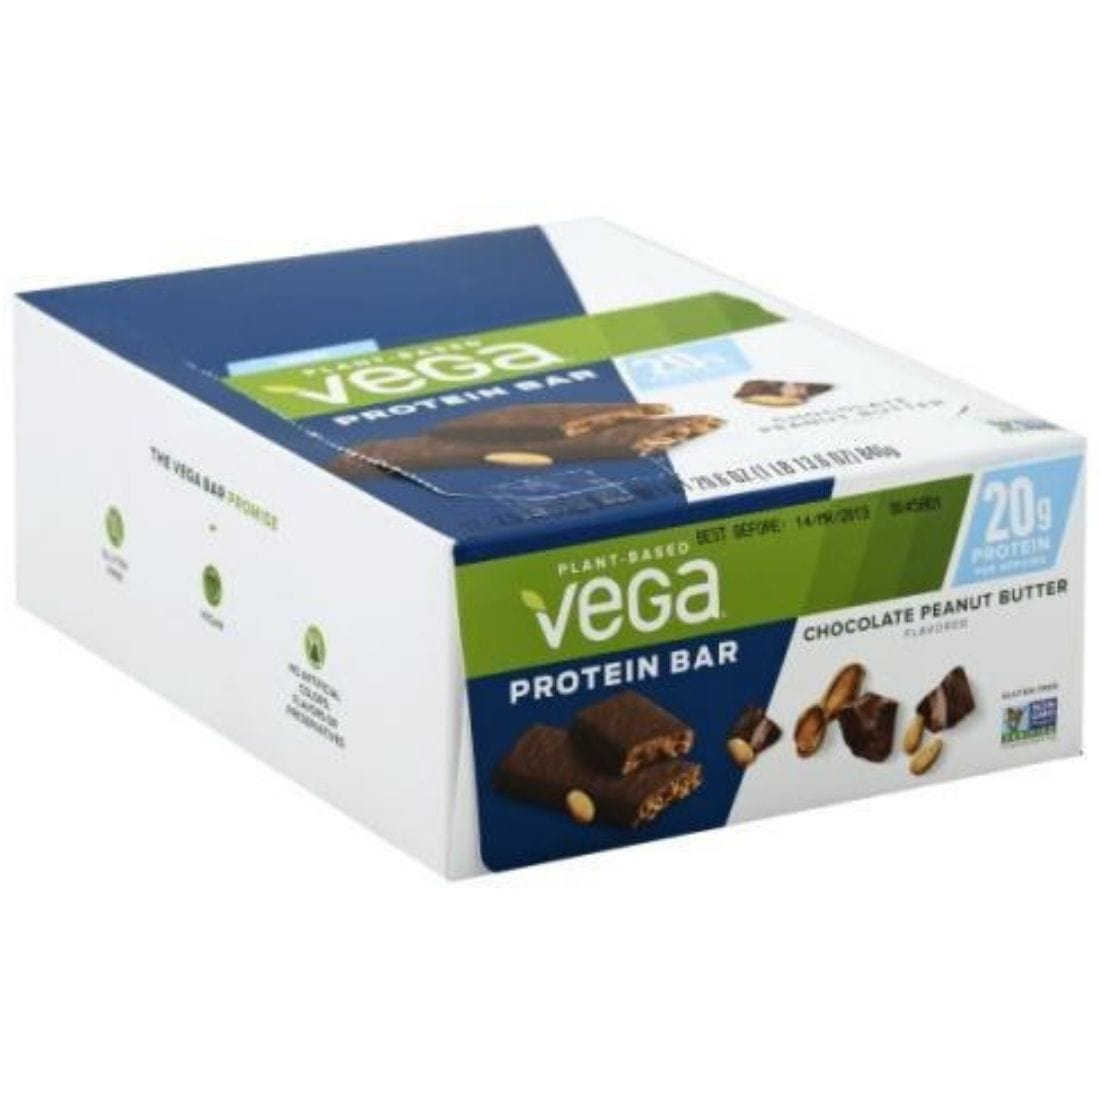 Vega Protein Bar (Plant Based)